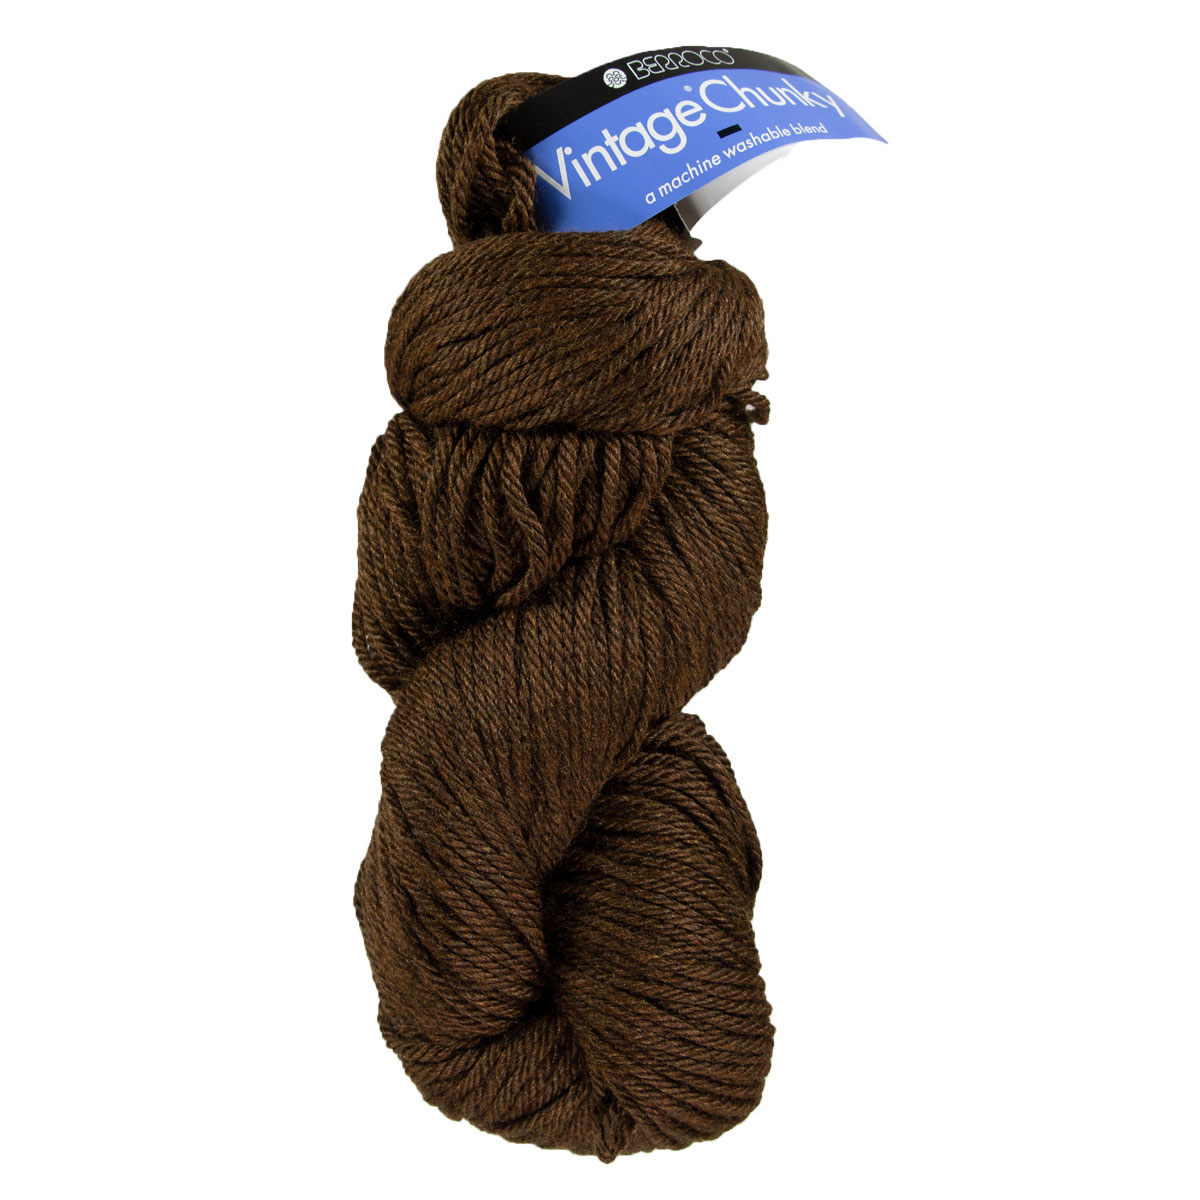 Berroco Vintage Chunky Yarn - 6179 Chocolate